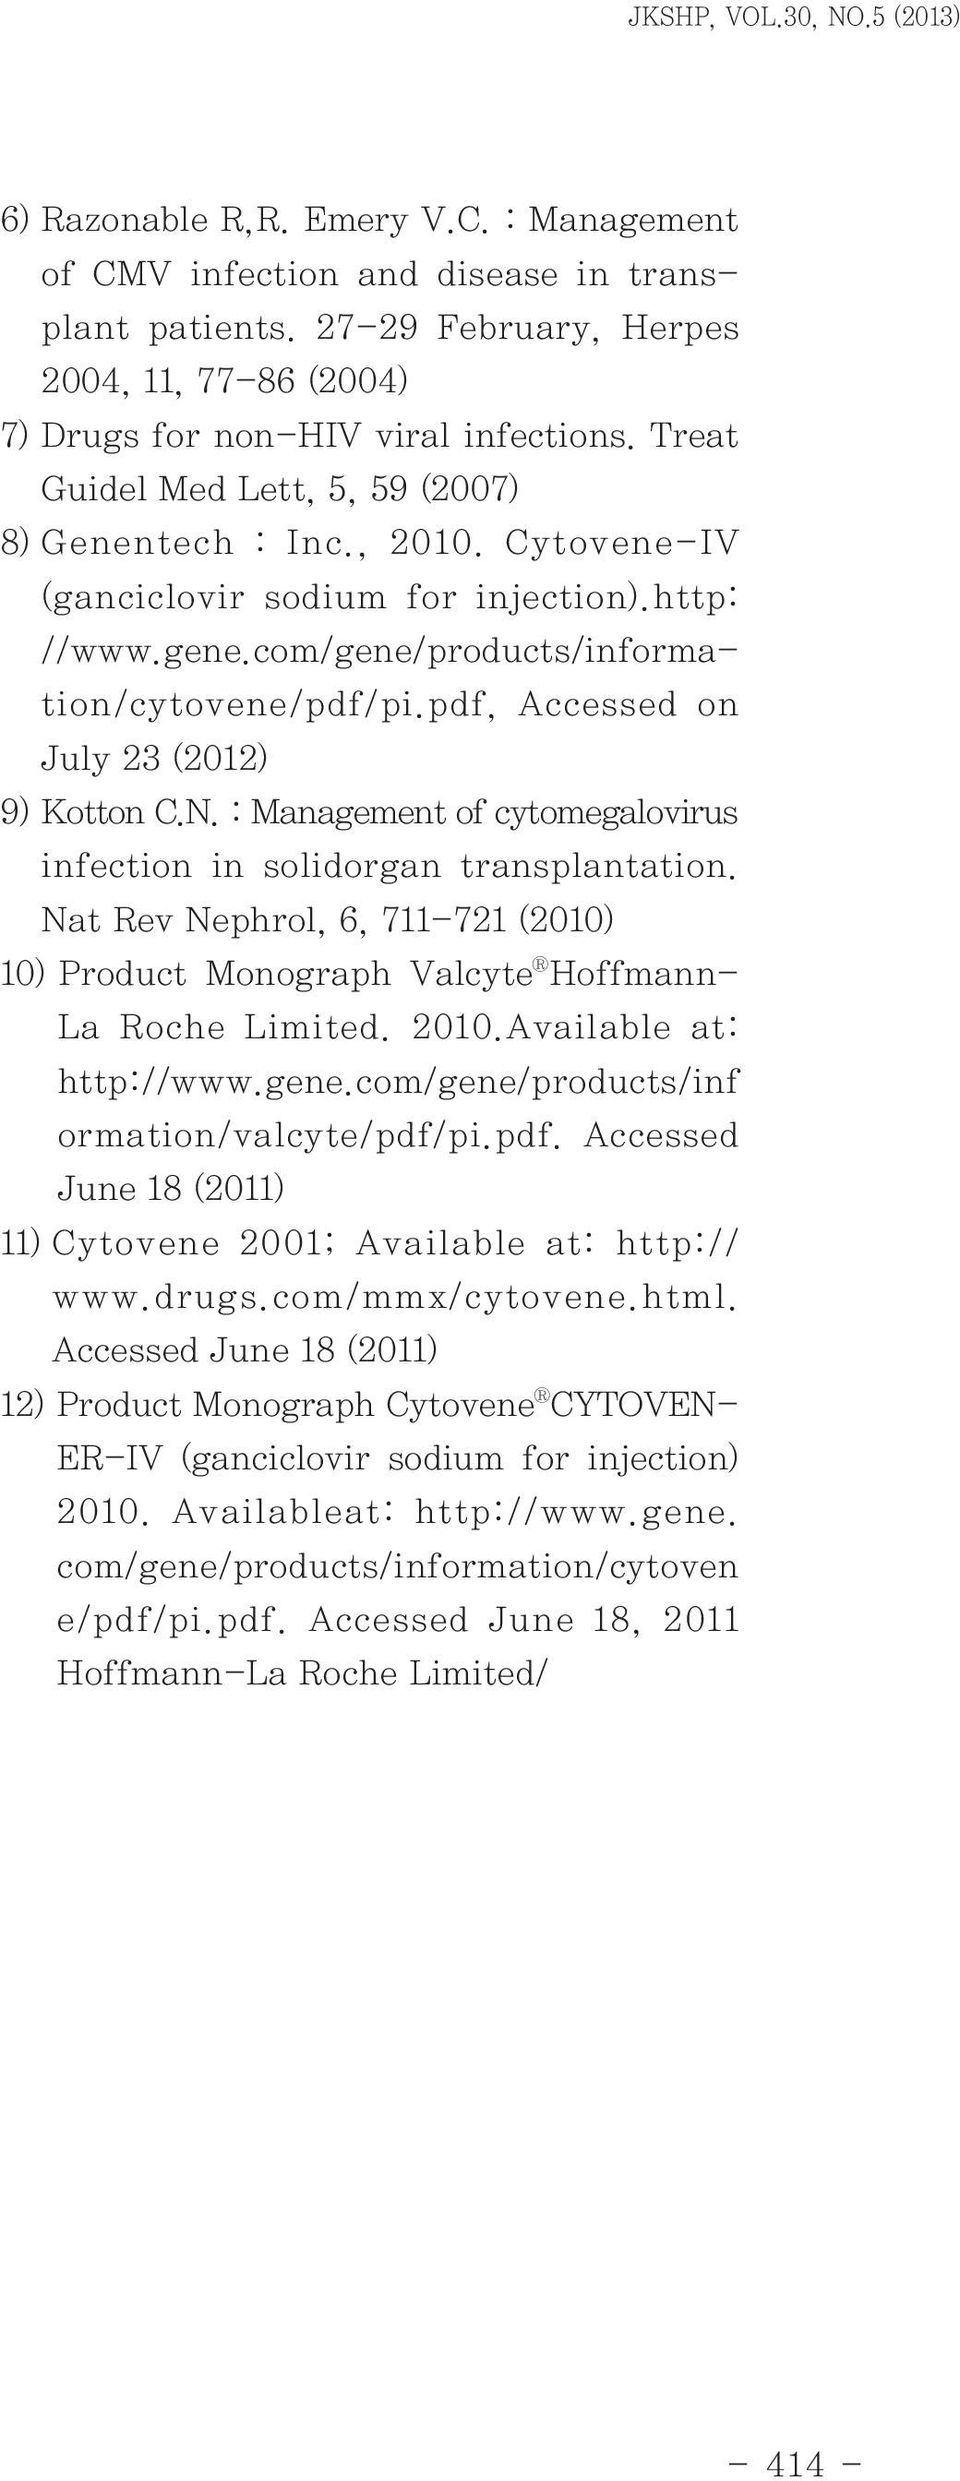 http: //www.gene.com/gene/products/information/cytovene/pdf/pi.pdf, Accessed on July 23 (2012) 9) Kotton C.N. : Management of cytomegalovirus infection in solidorgan transplantation.